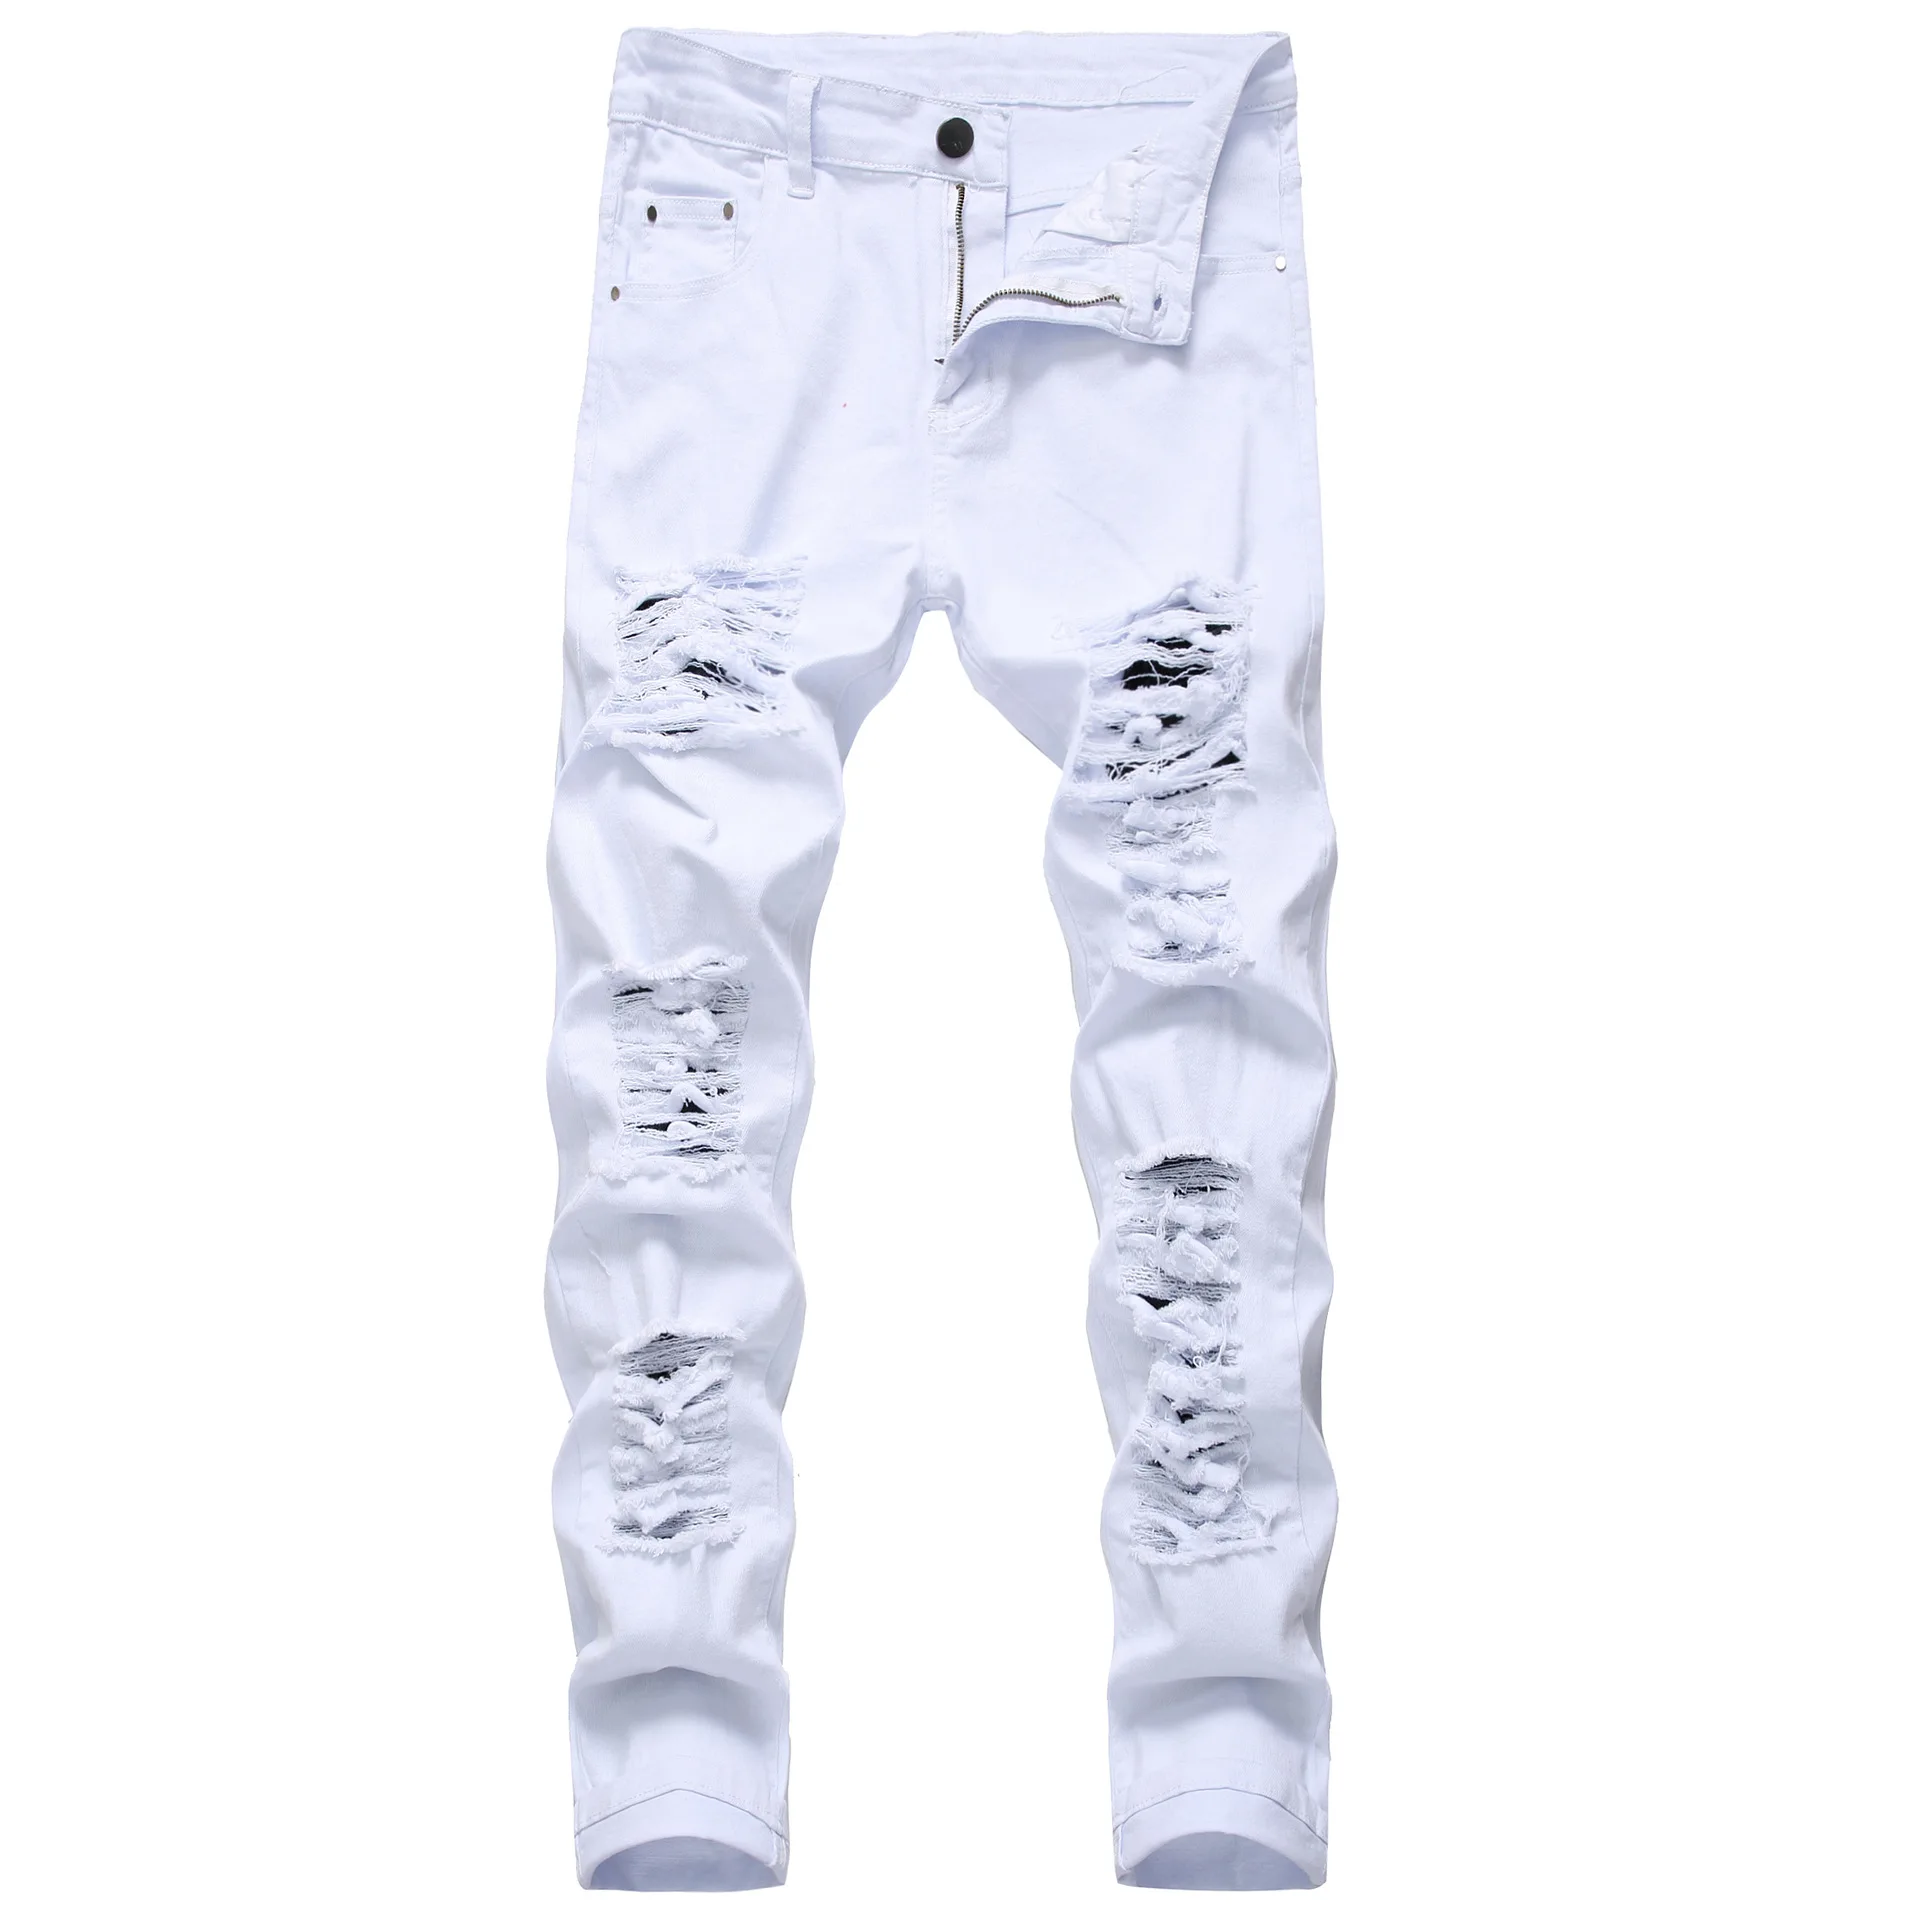 Denim Plain Damler Mens Knee Cut White Ripped Jeans Waist Size 2836